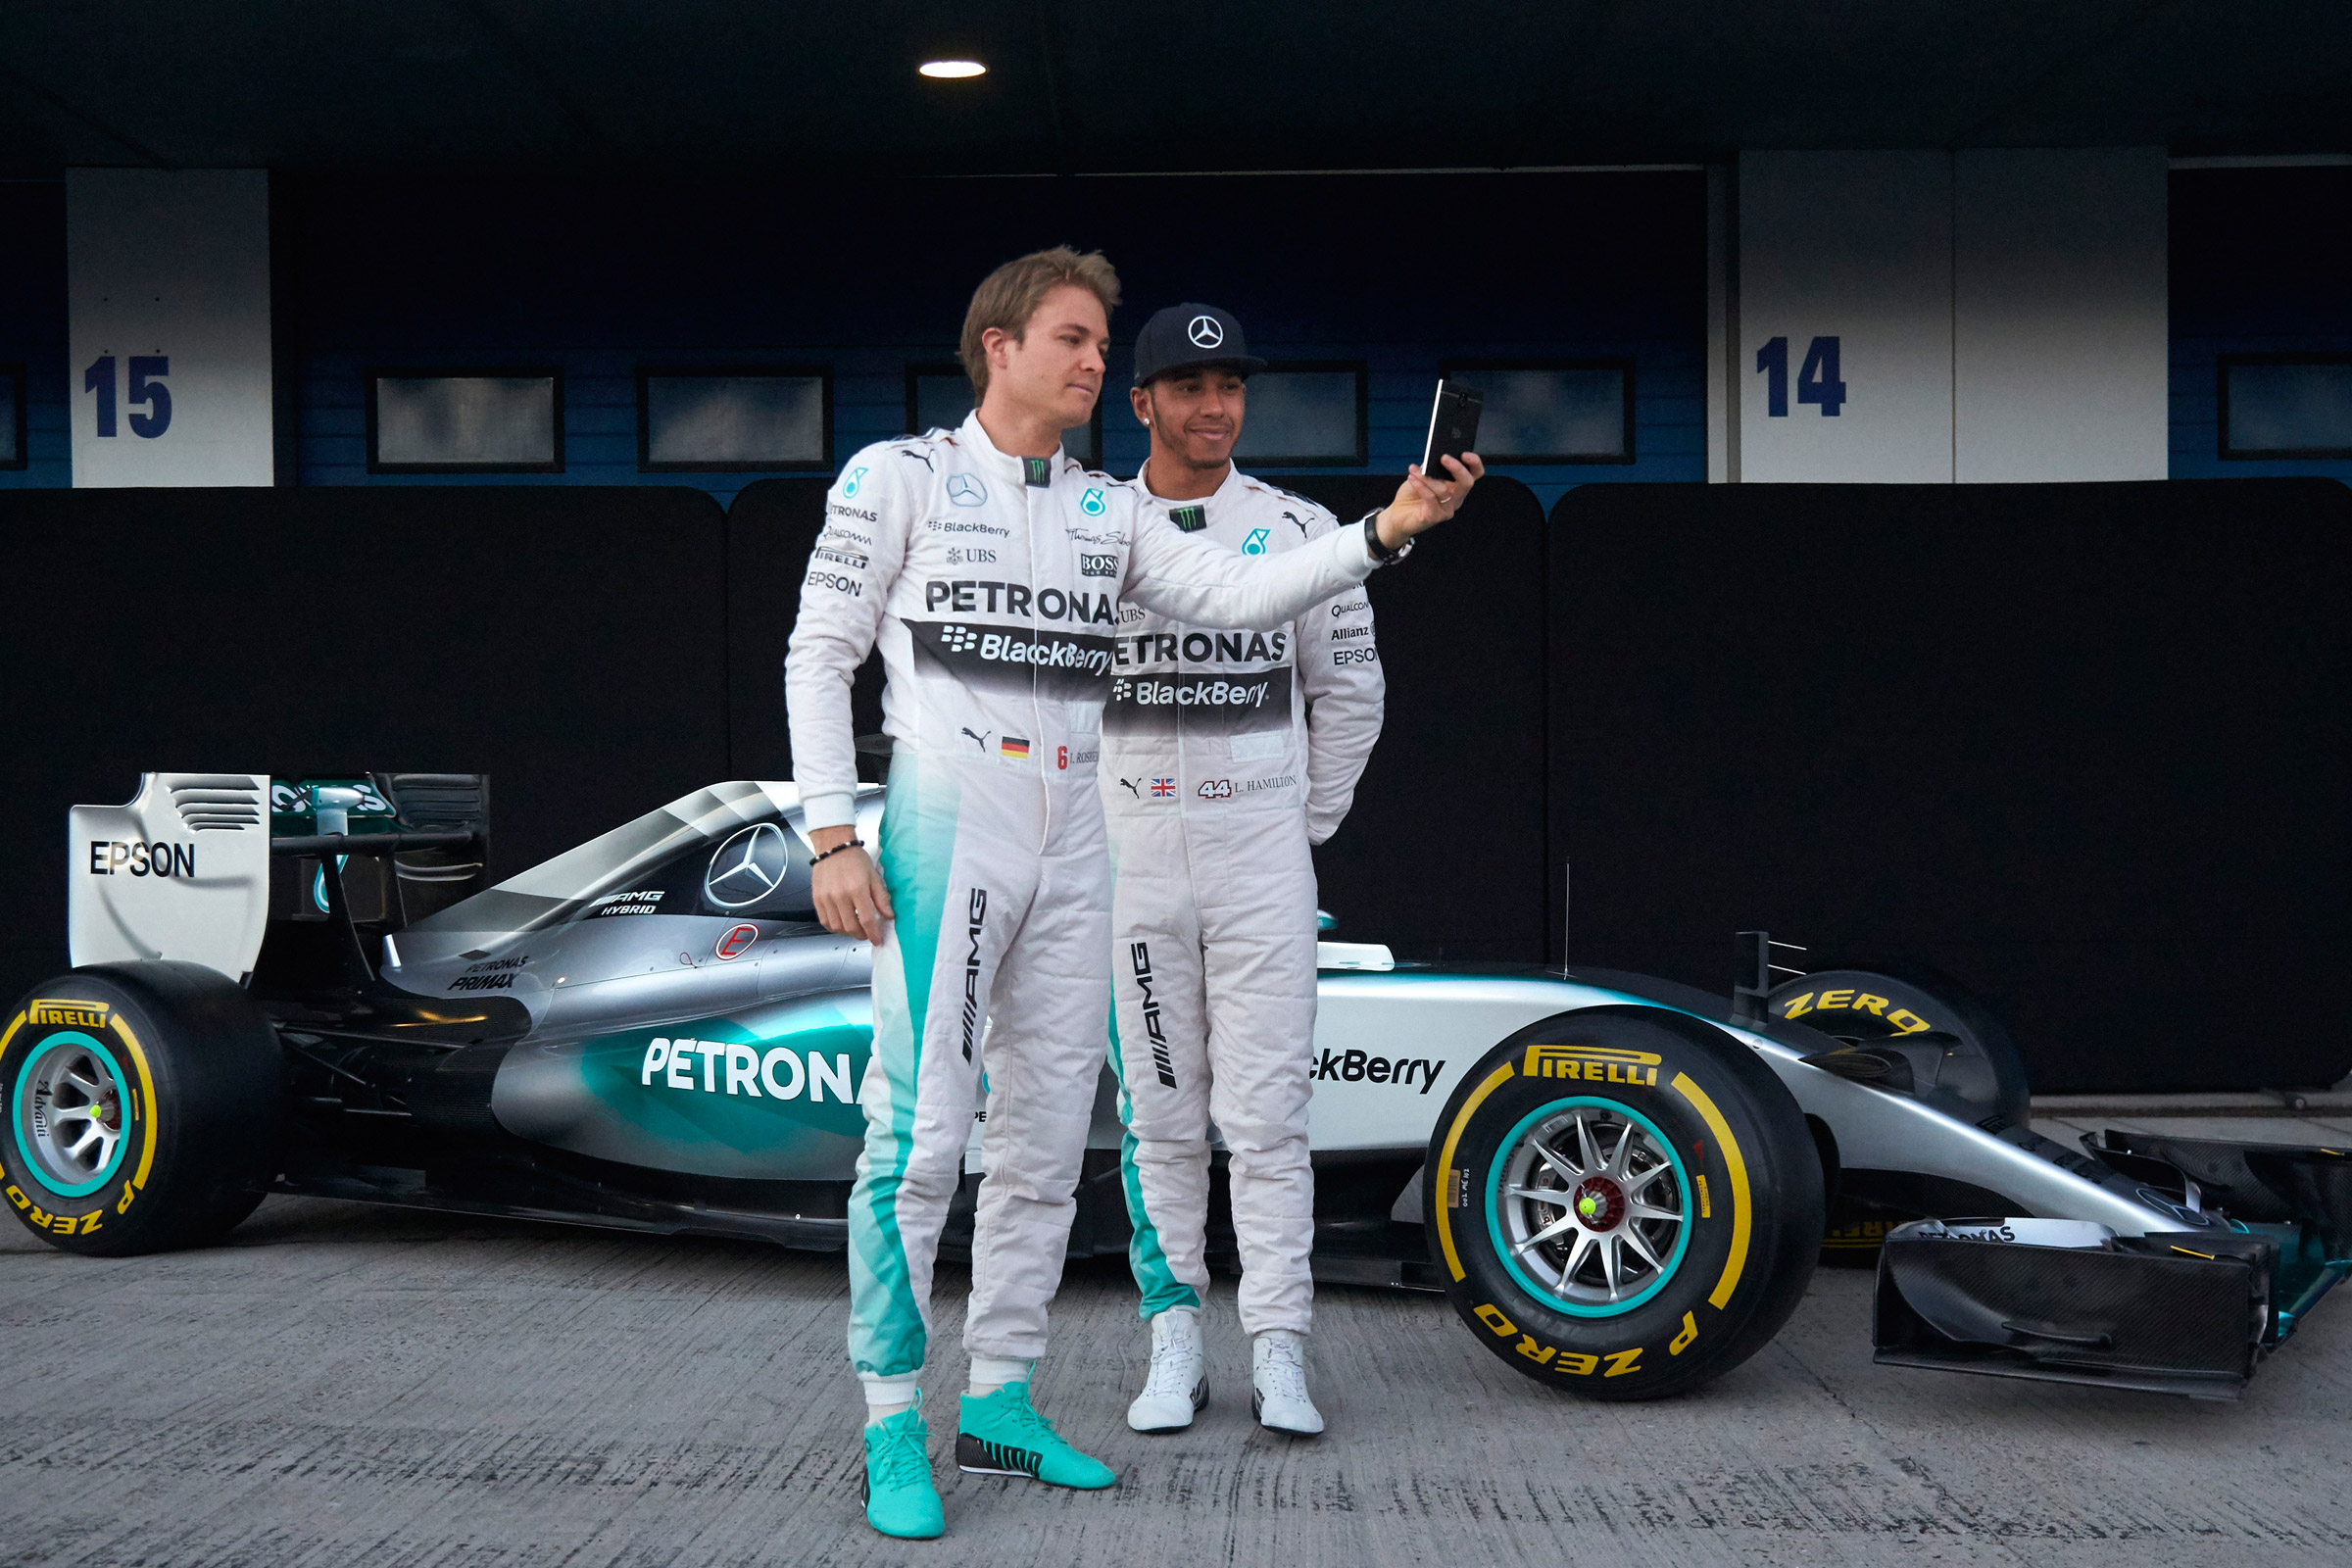 Lewis Hamilton and Nico Rosberg "the perfect couple" says 